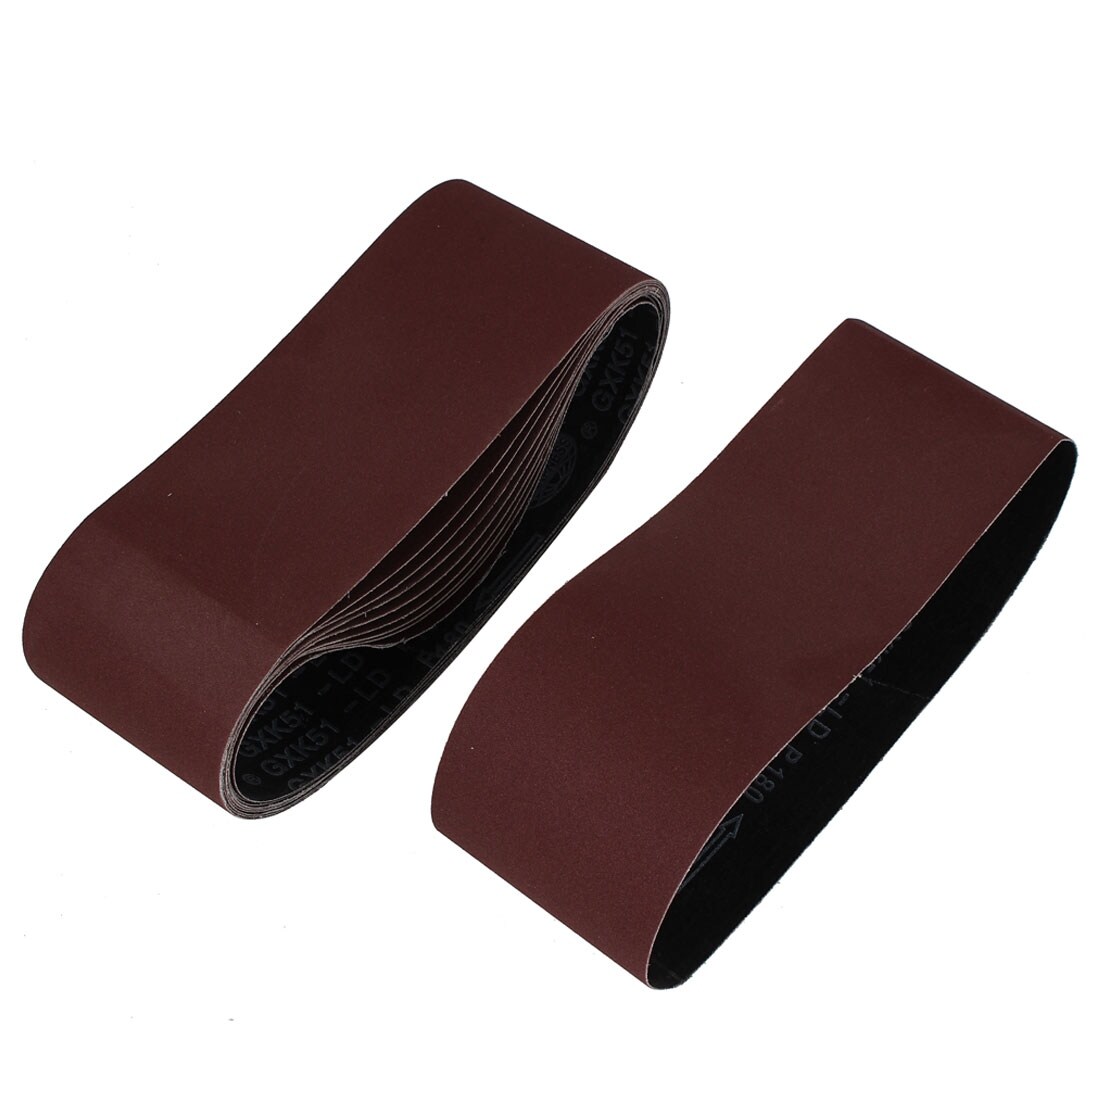 180 Grit 10pcs Alumina Sanding Belts Sanding Band Grinding Polishing Abrasive Sandpaper for Woodworking Metal Polishing